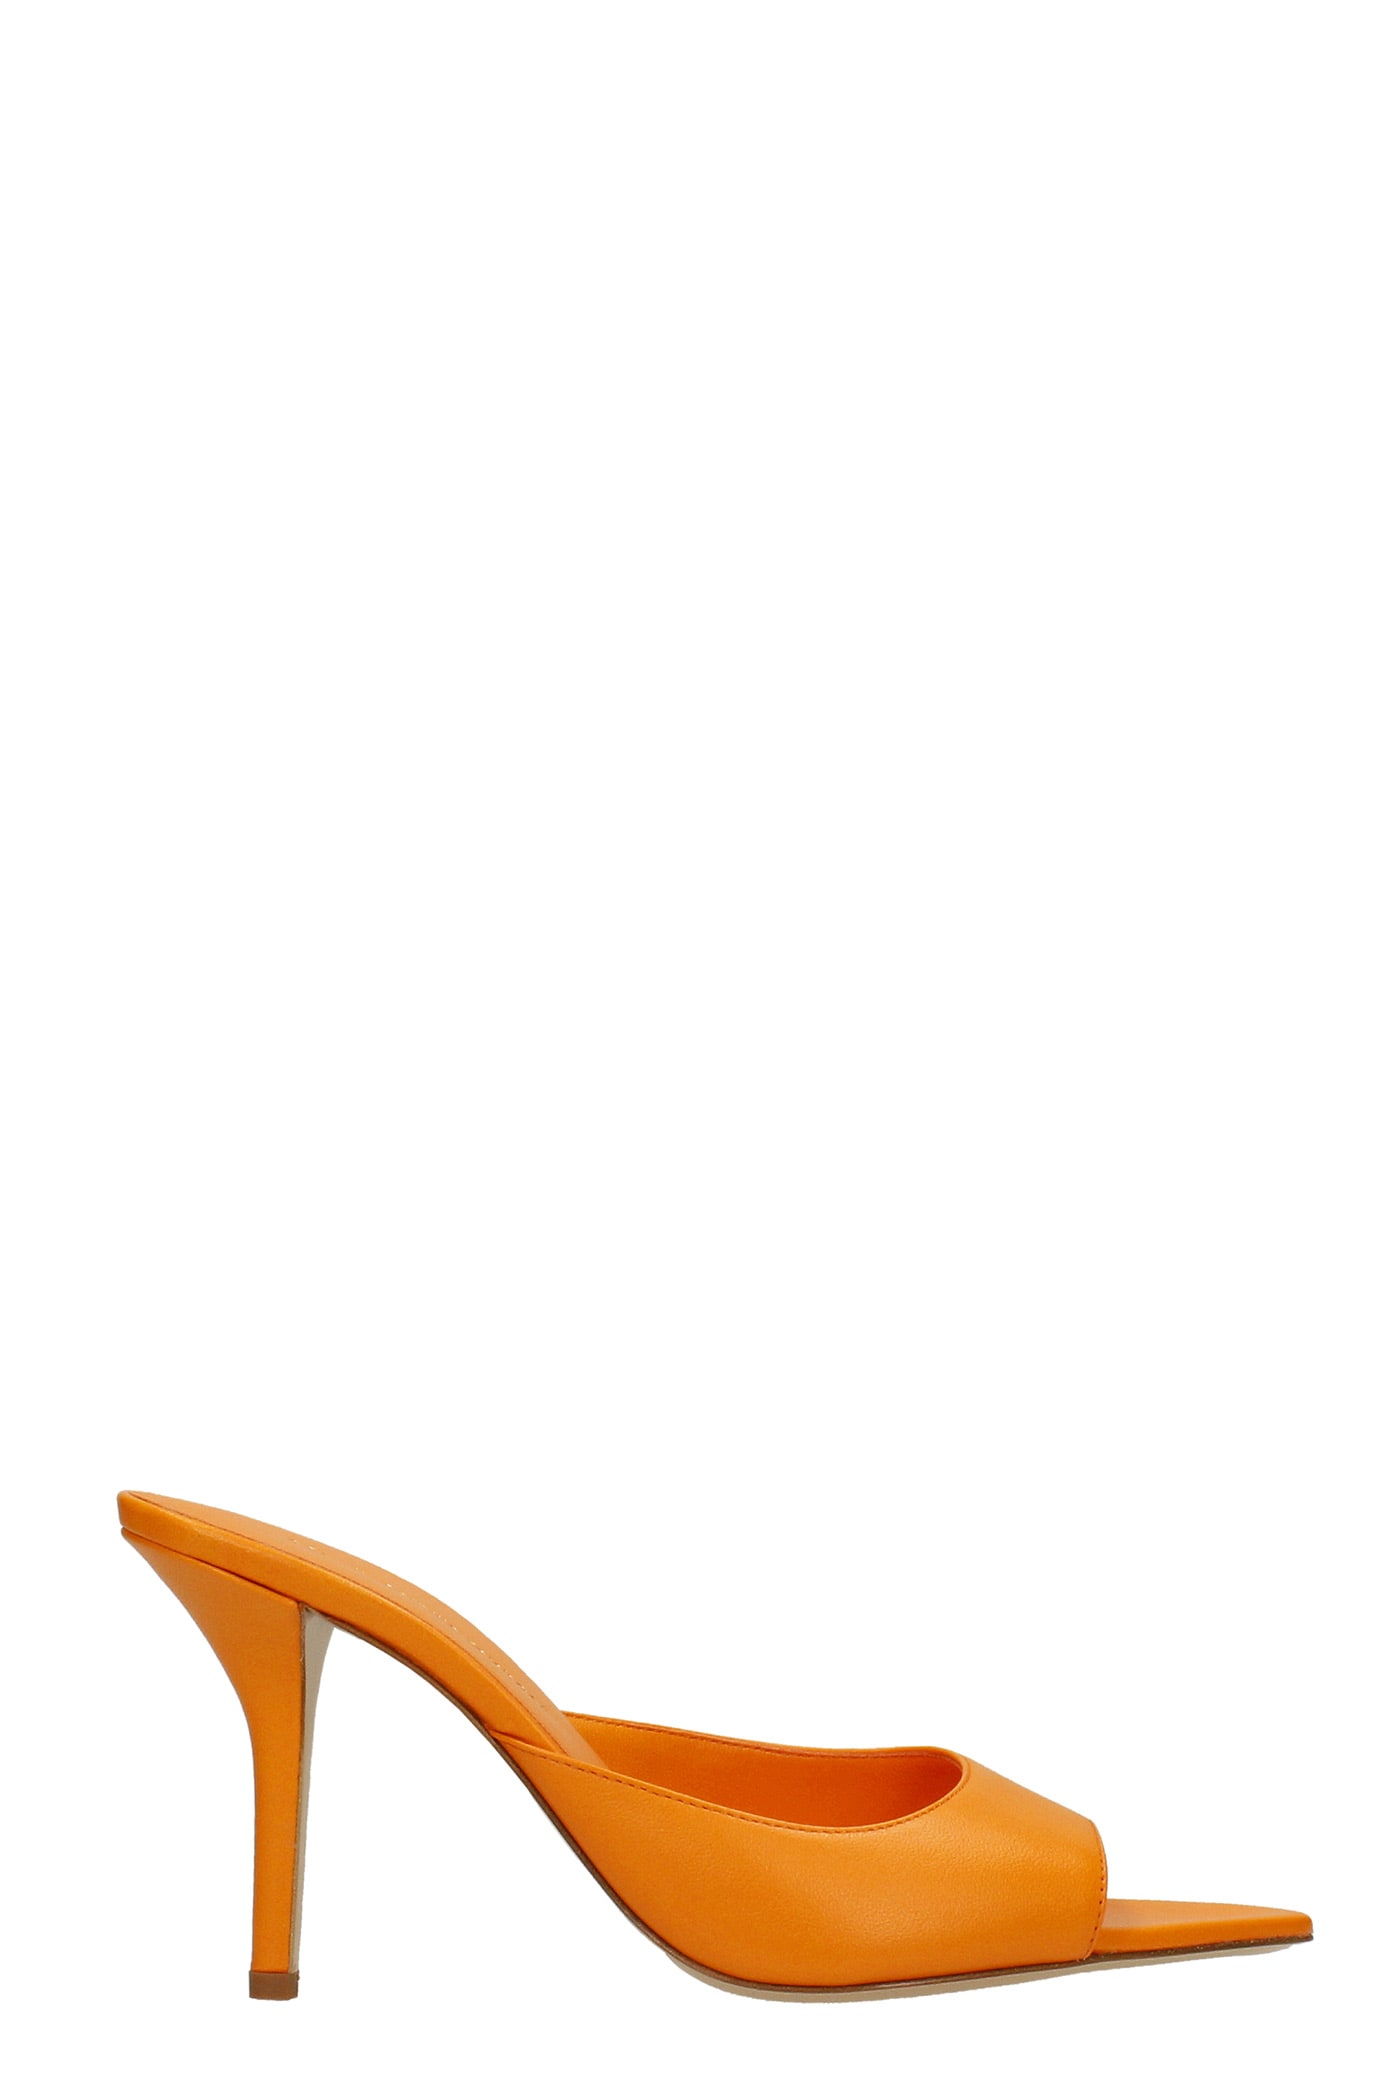 Gia X Pernille Teisbaek Perni 04 Sandals In Orange Leather